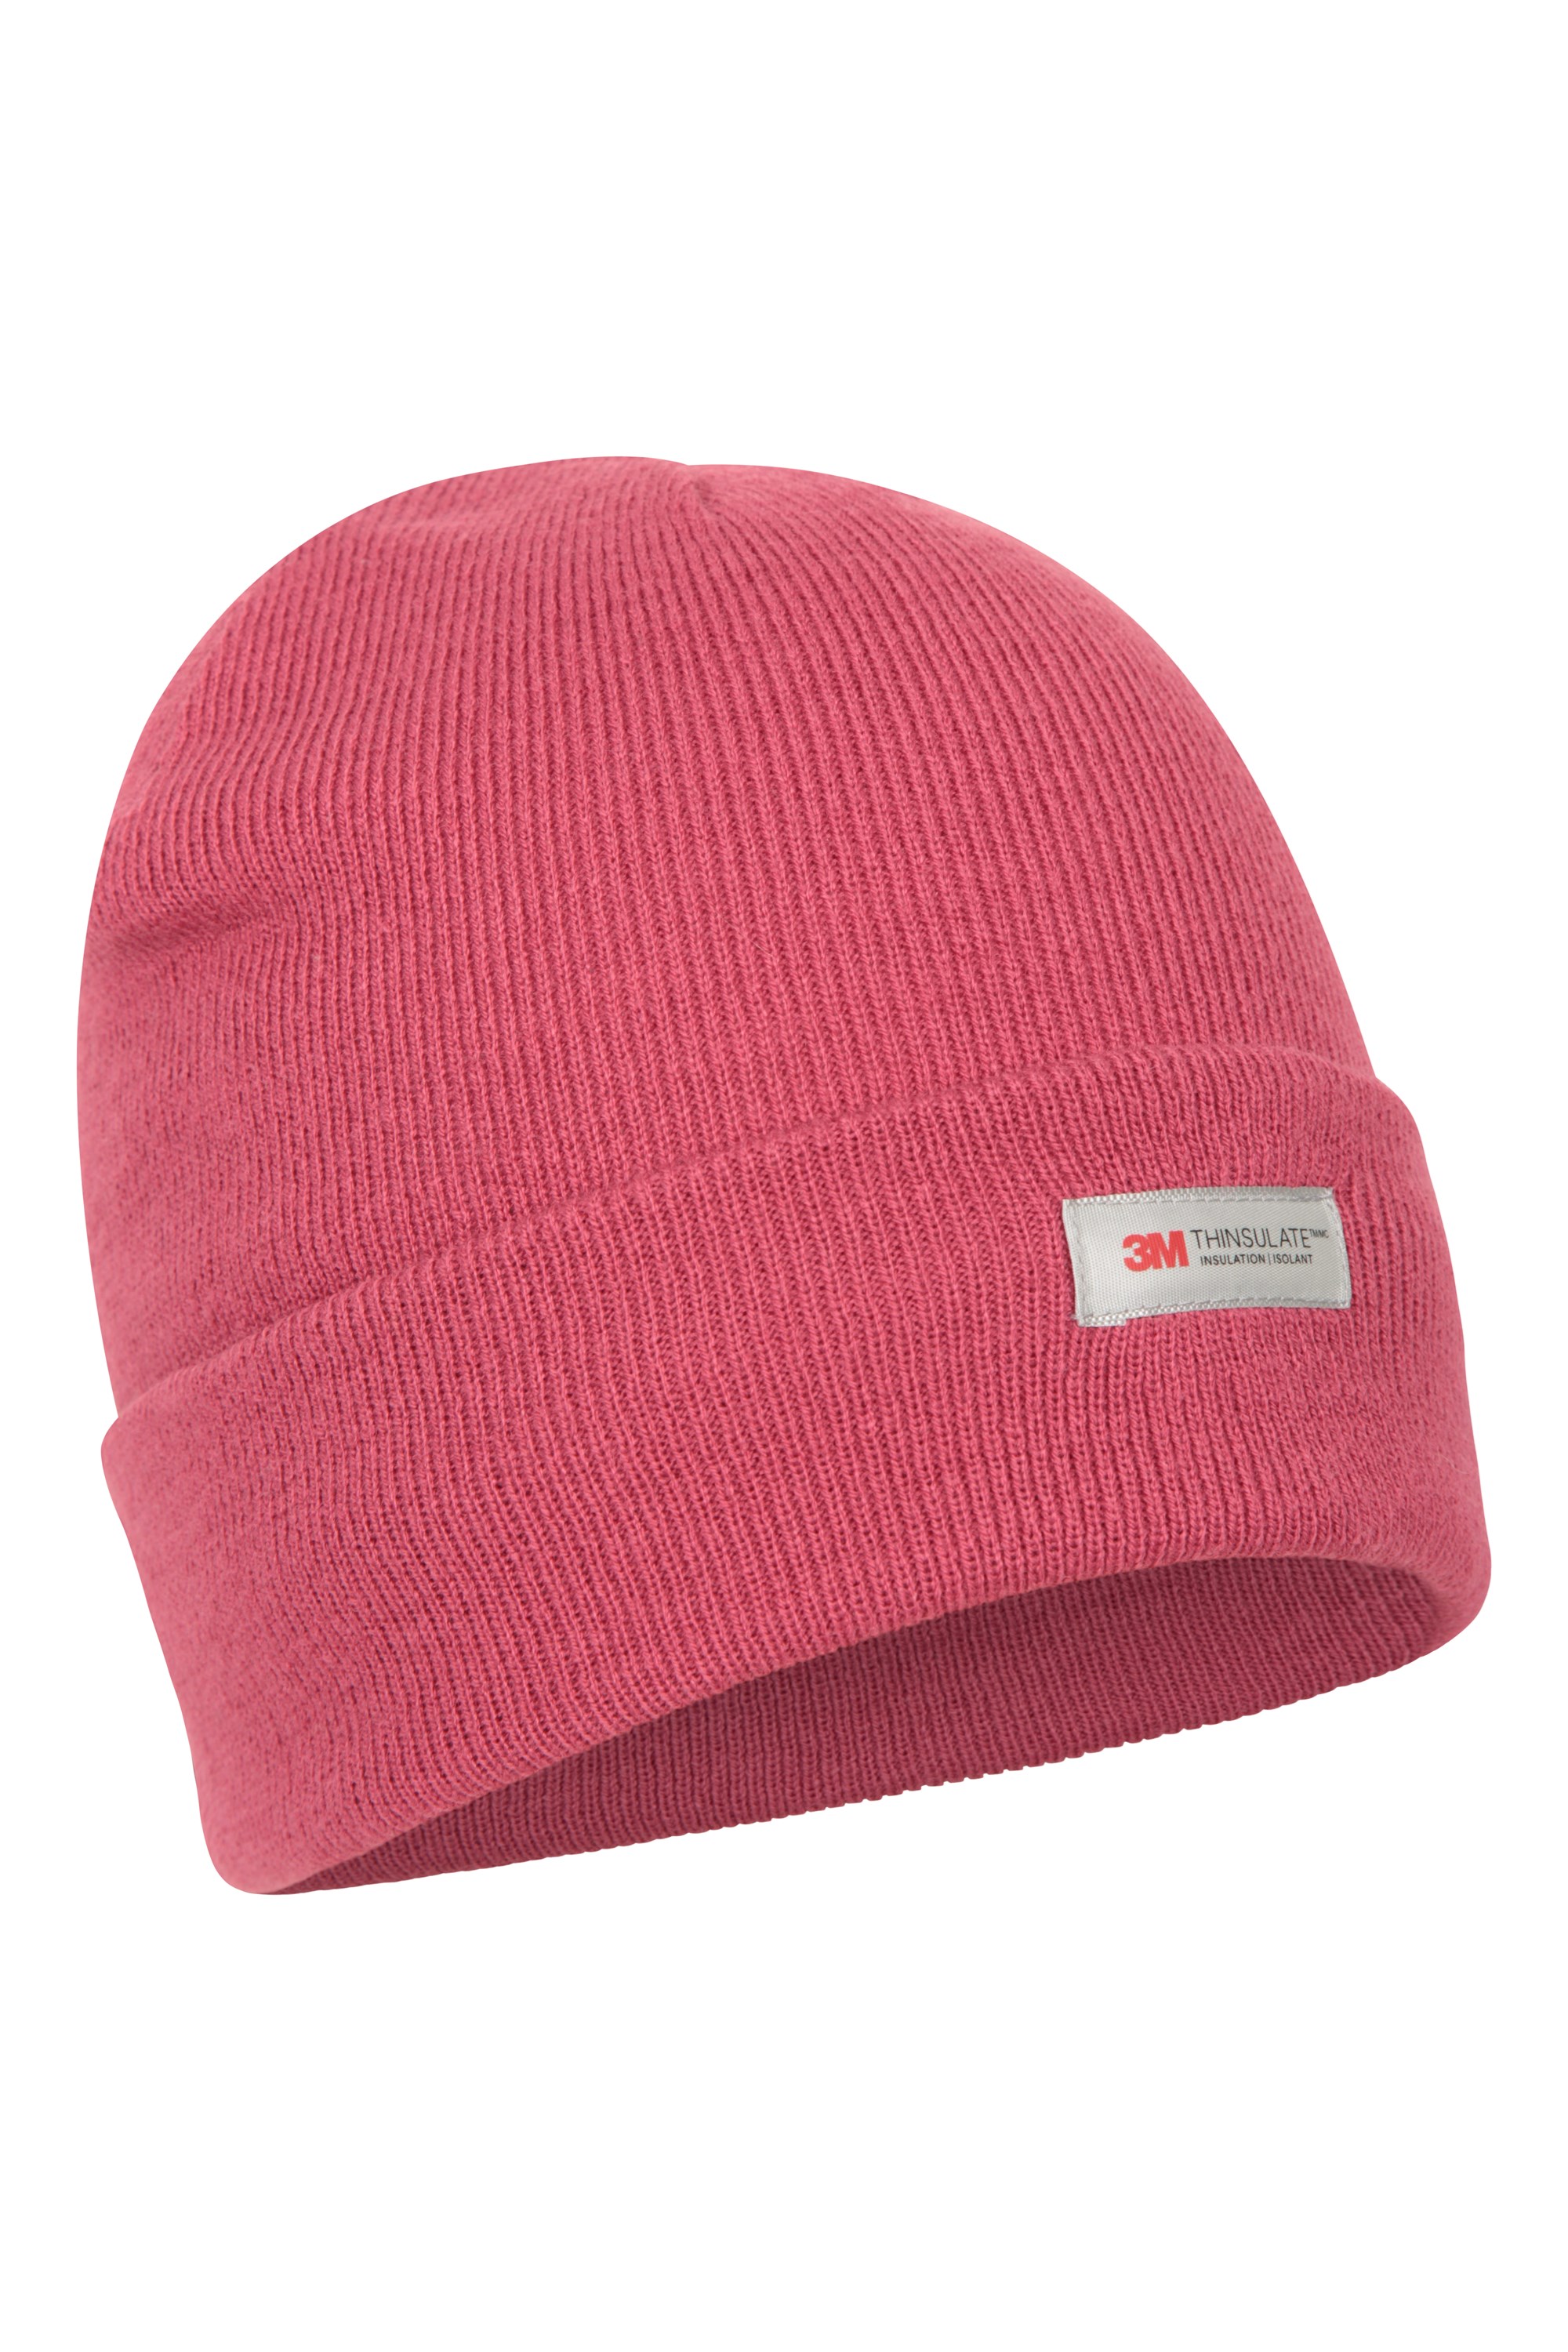 pink soft fleece hat size small to medium Mountain Warehouse Ski beanie hat winter hat Ladies. 